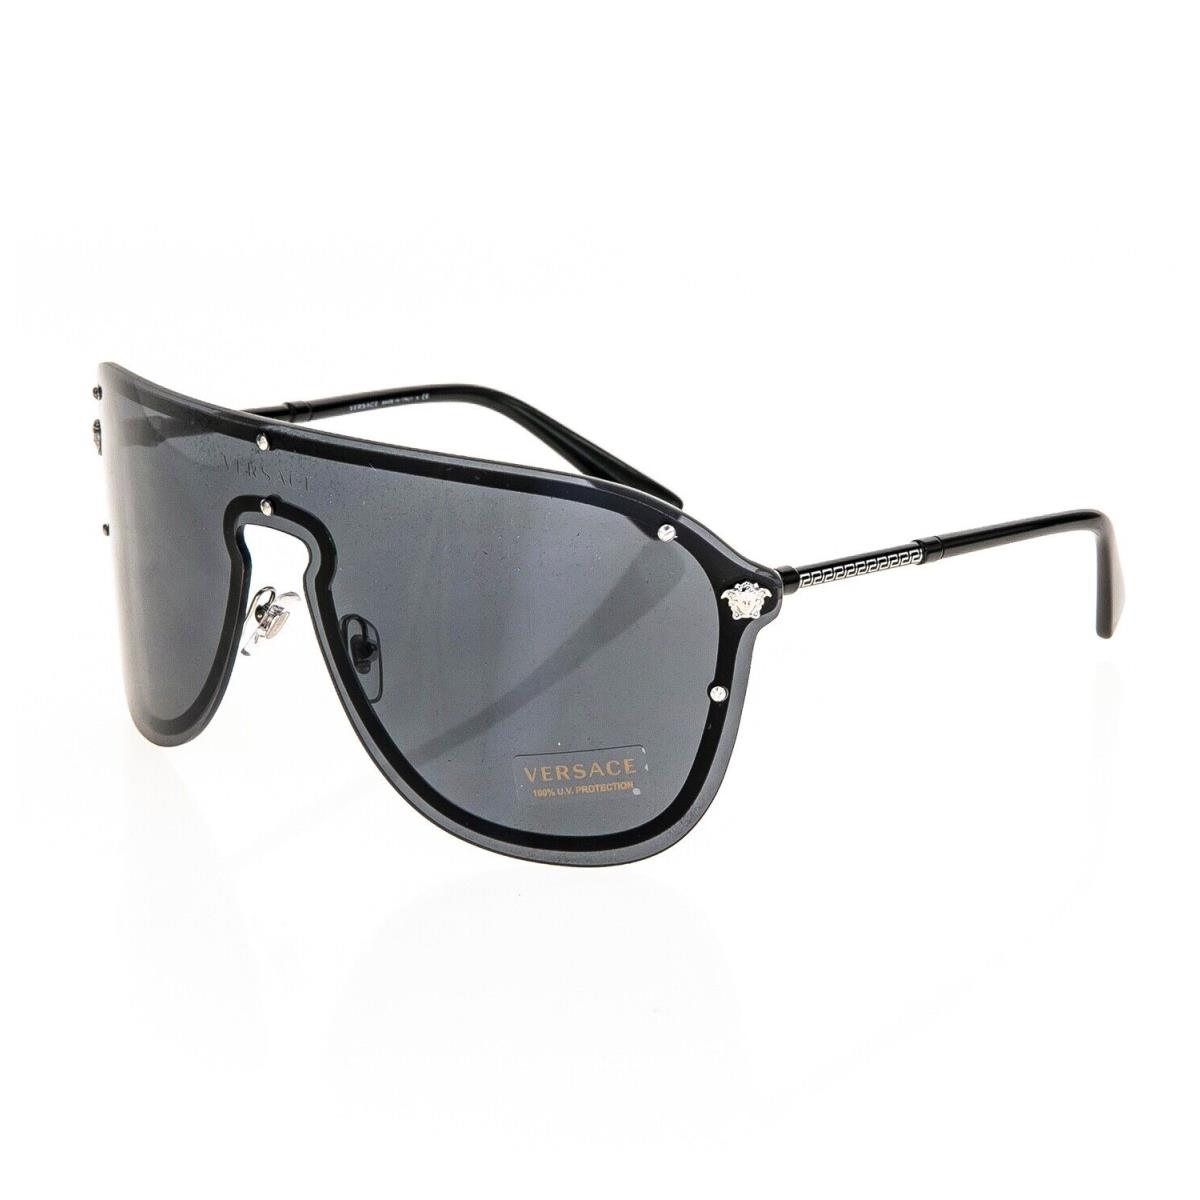 Versace sunglasses  - 1000/87 , Silver Frame, Black Lens